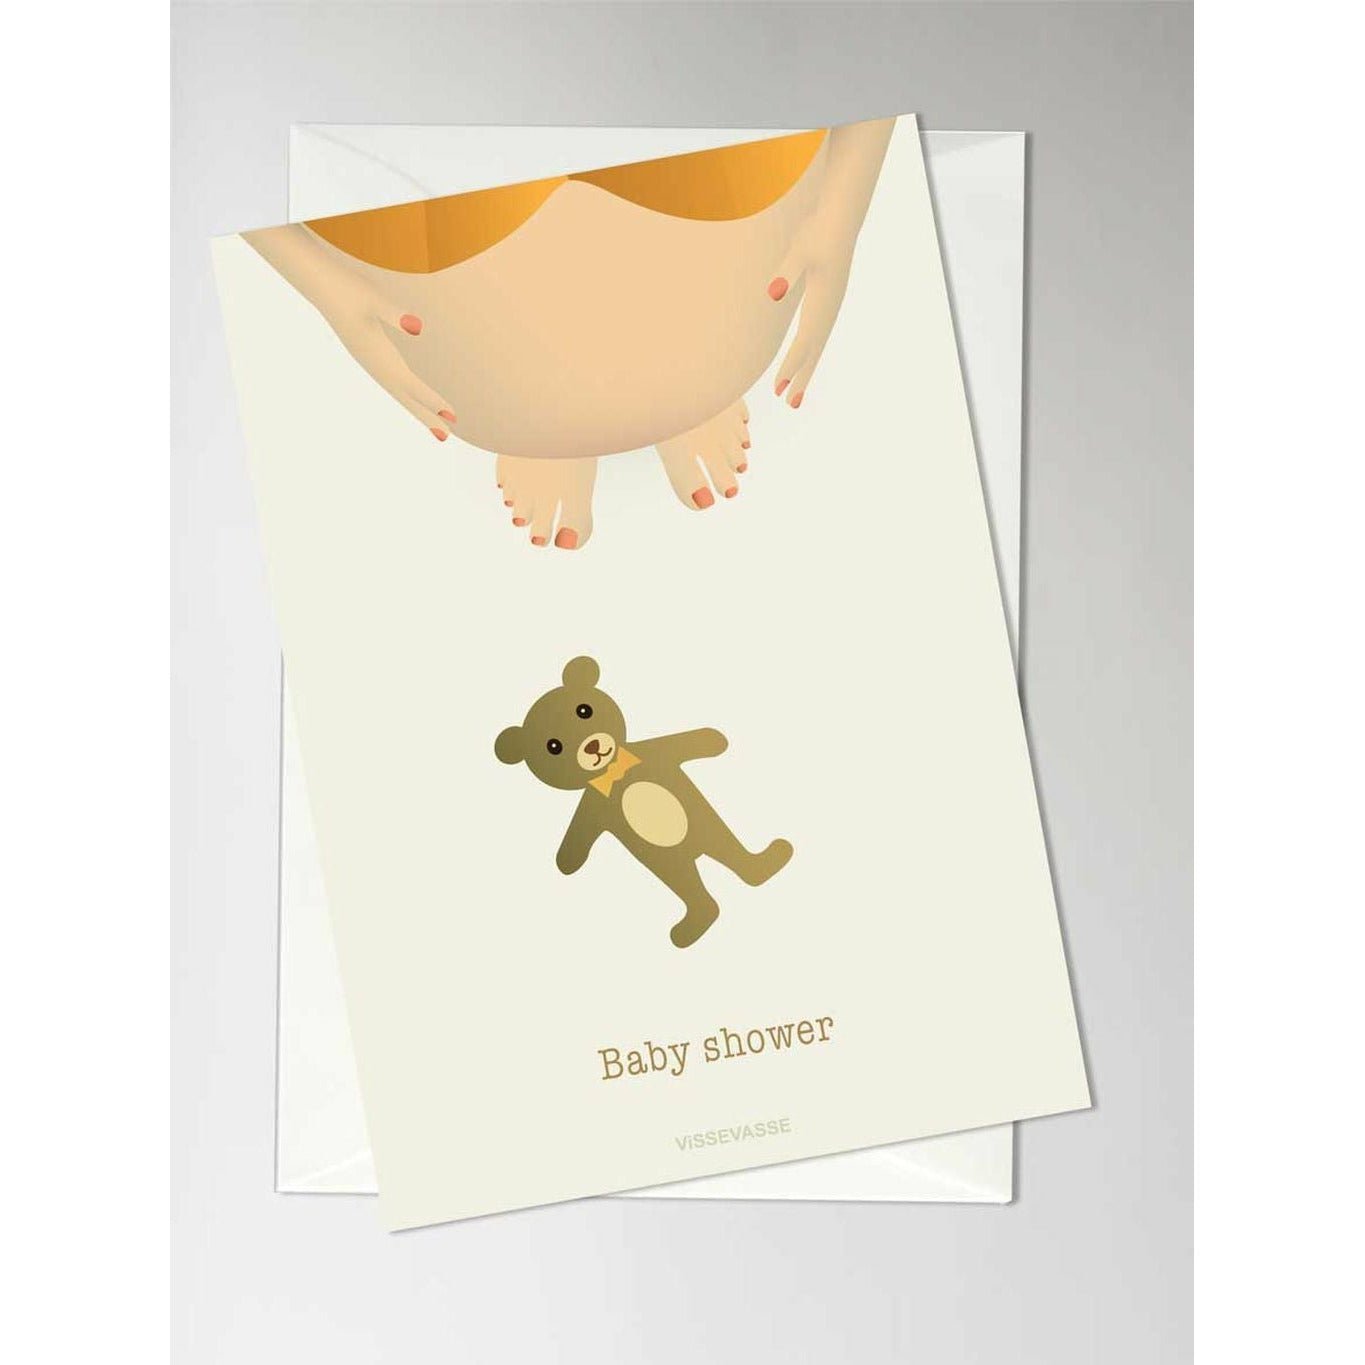 Vissevasse Baby Shower Greeting Card